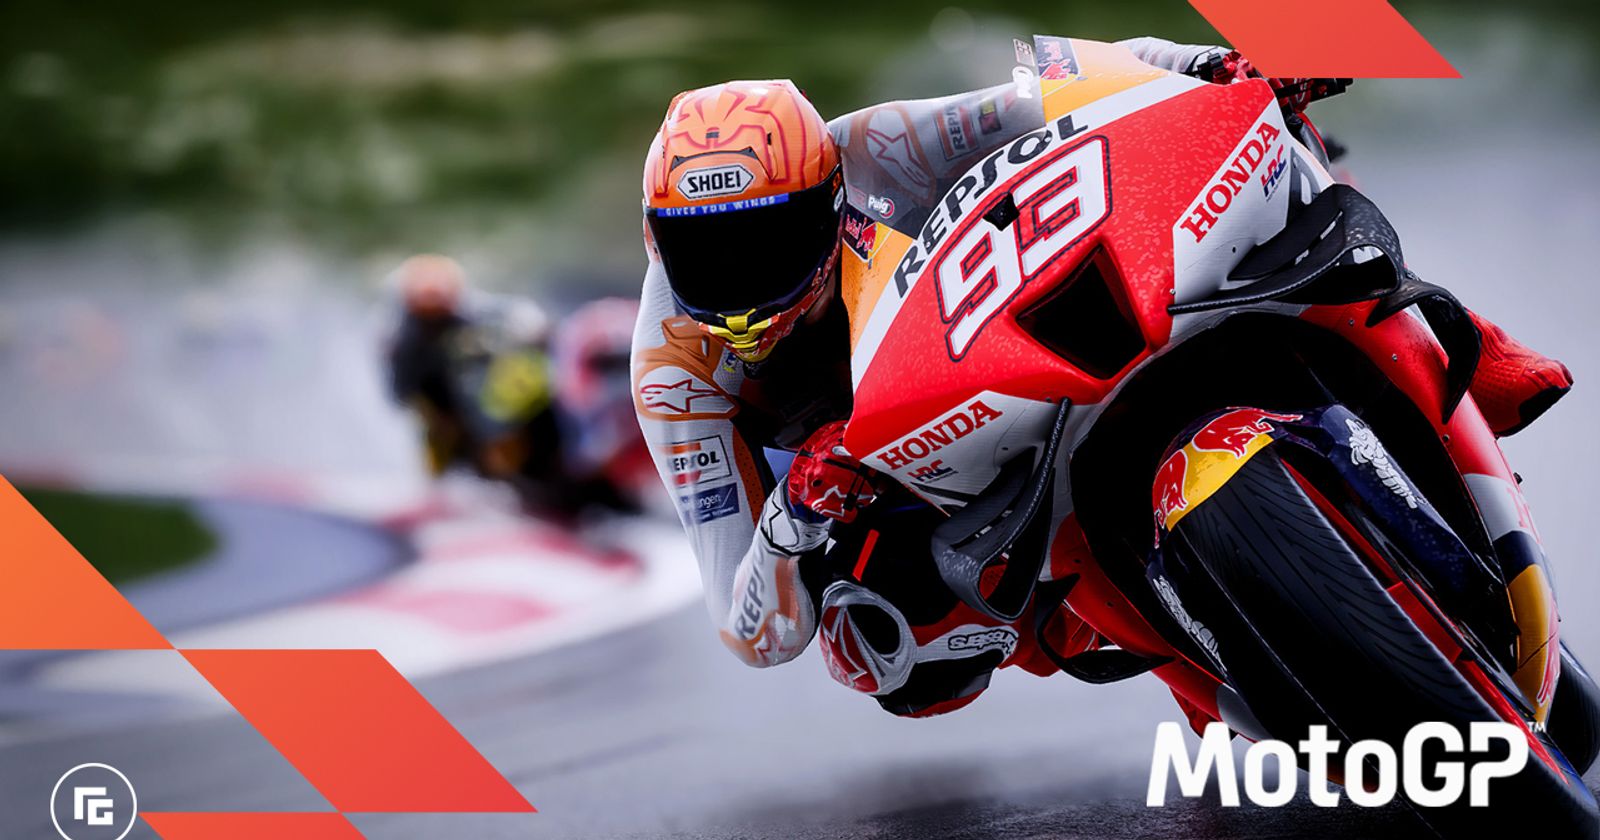 MotoGP 23 PS5: Milestone to continue next-gen MotoGP